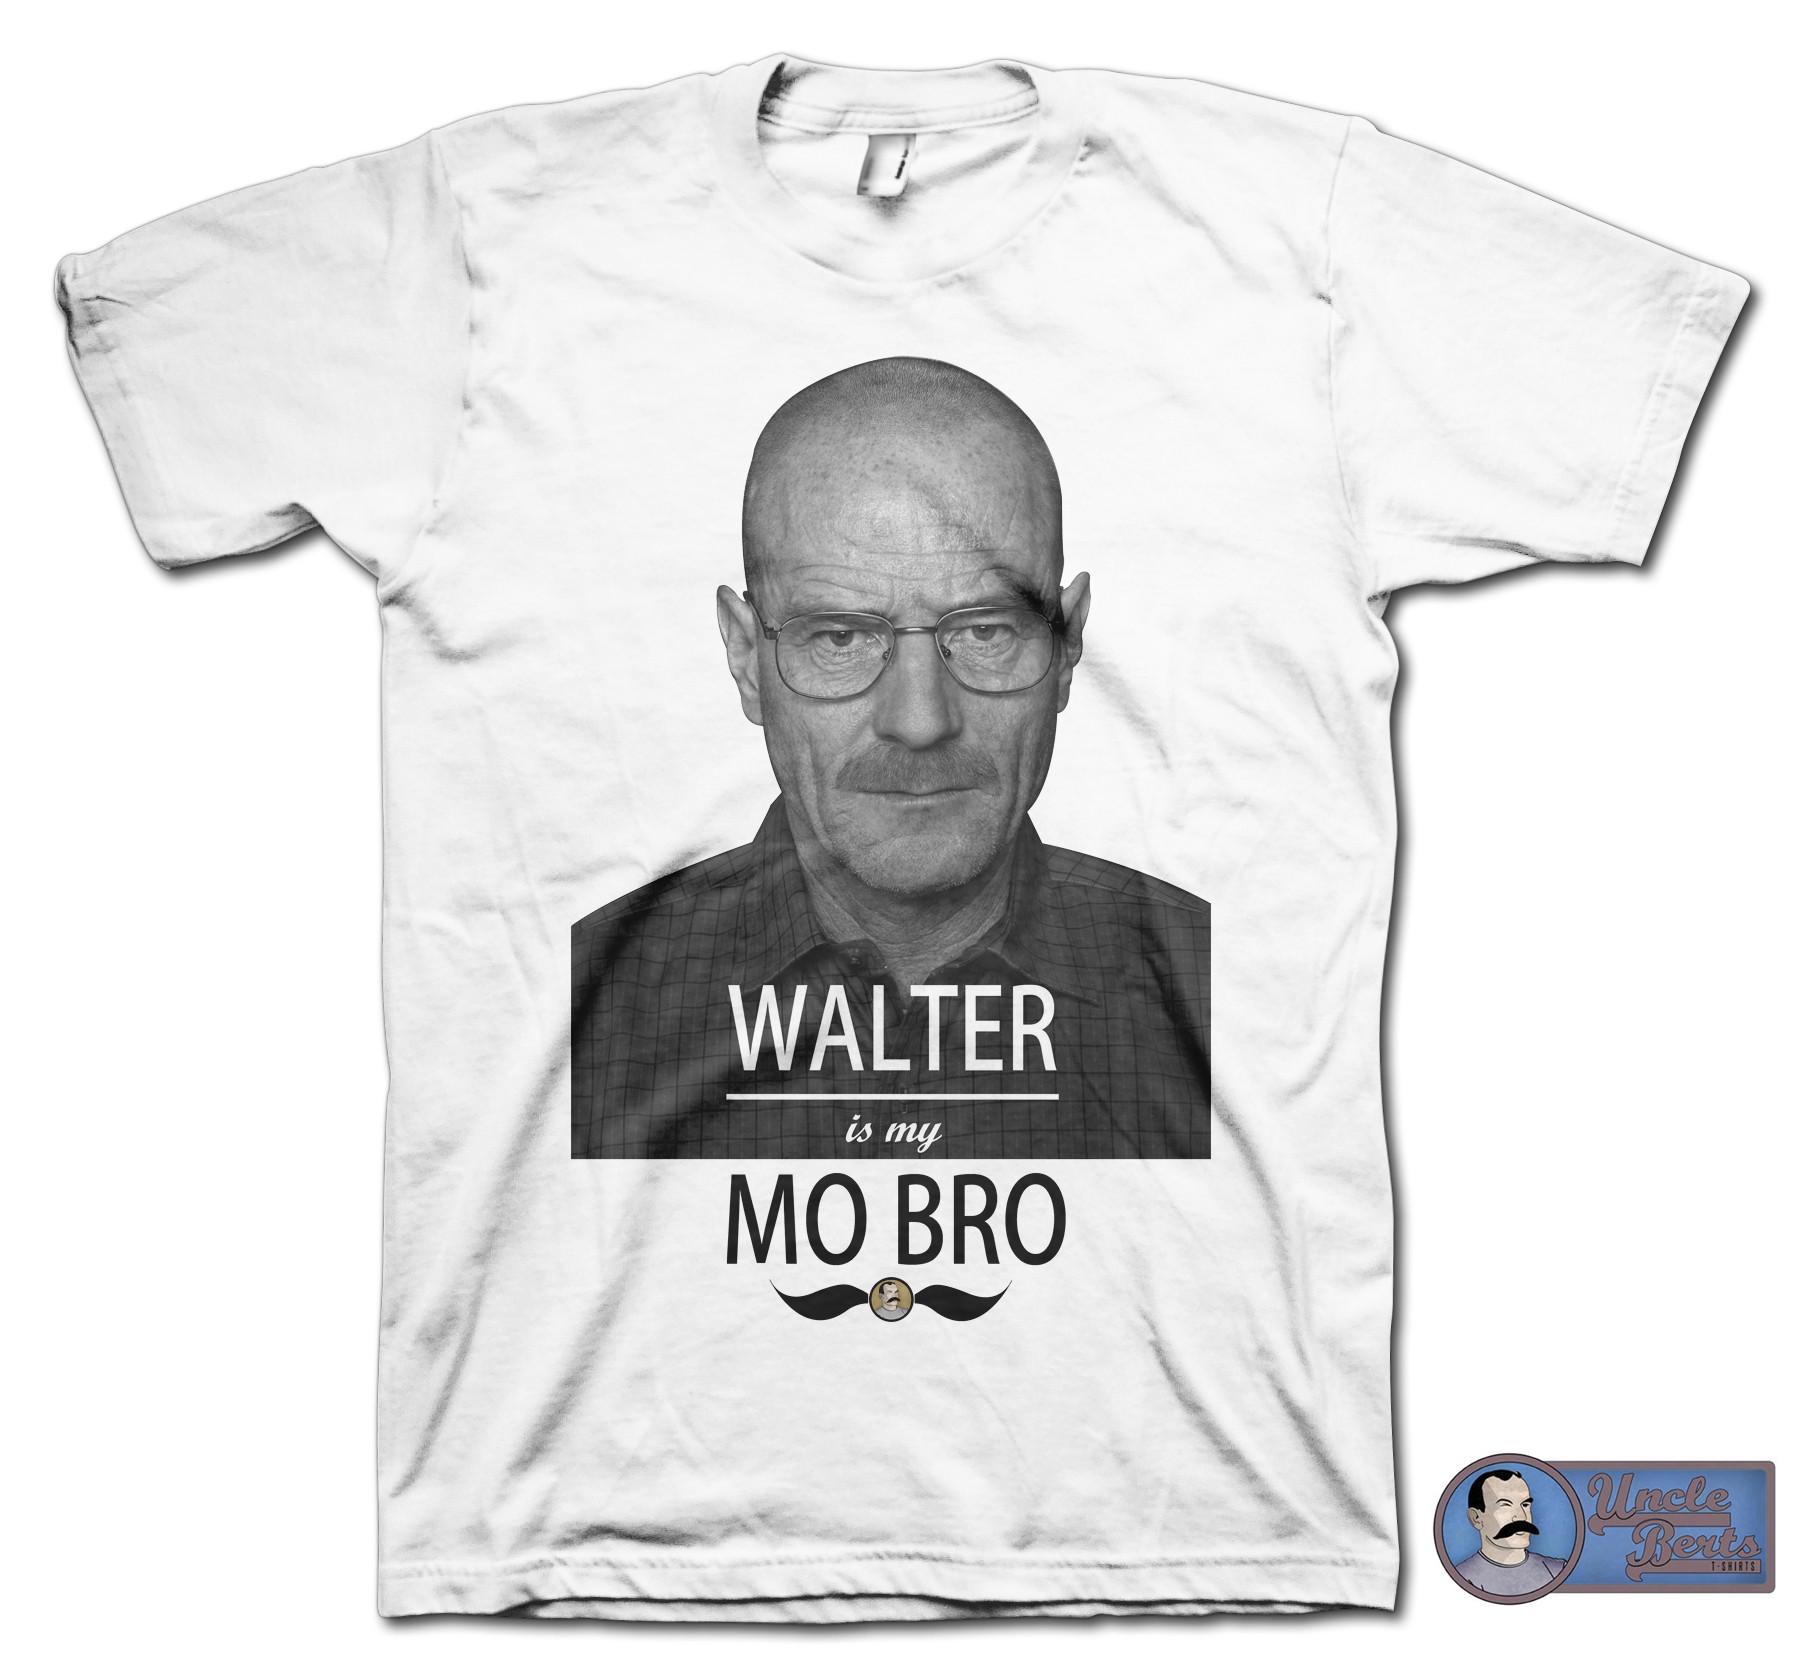 WALTER is my MO BRO T-shirt